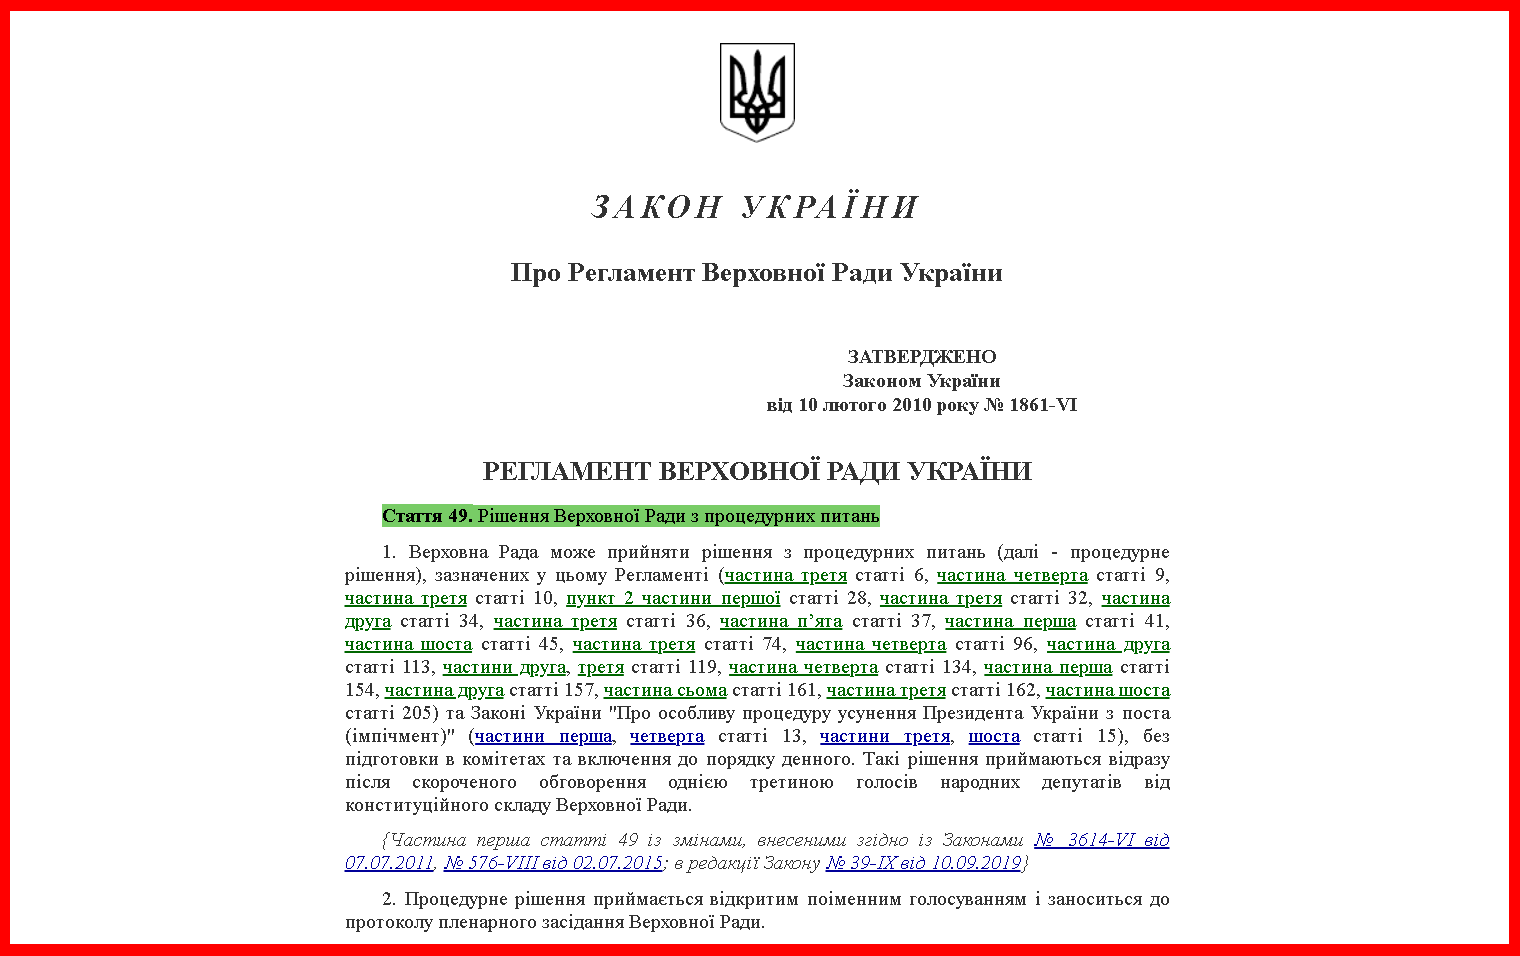 https://zakon.rada.gov.ua/laws/show/1861-17#Text